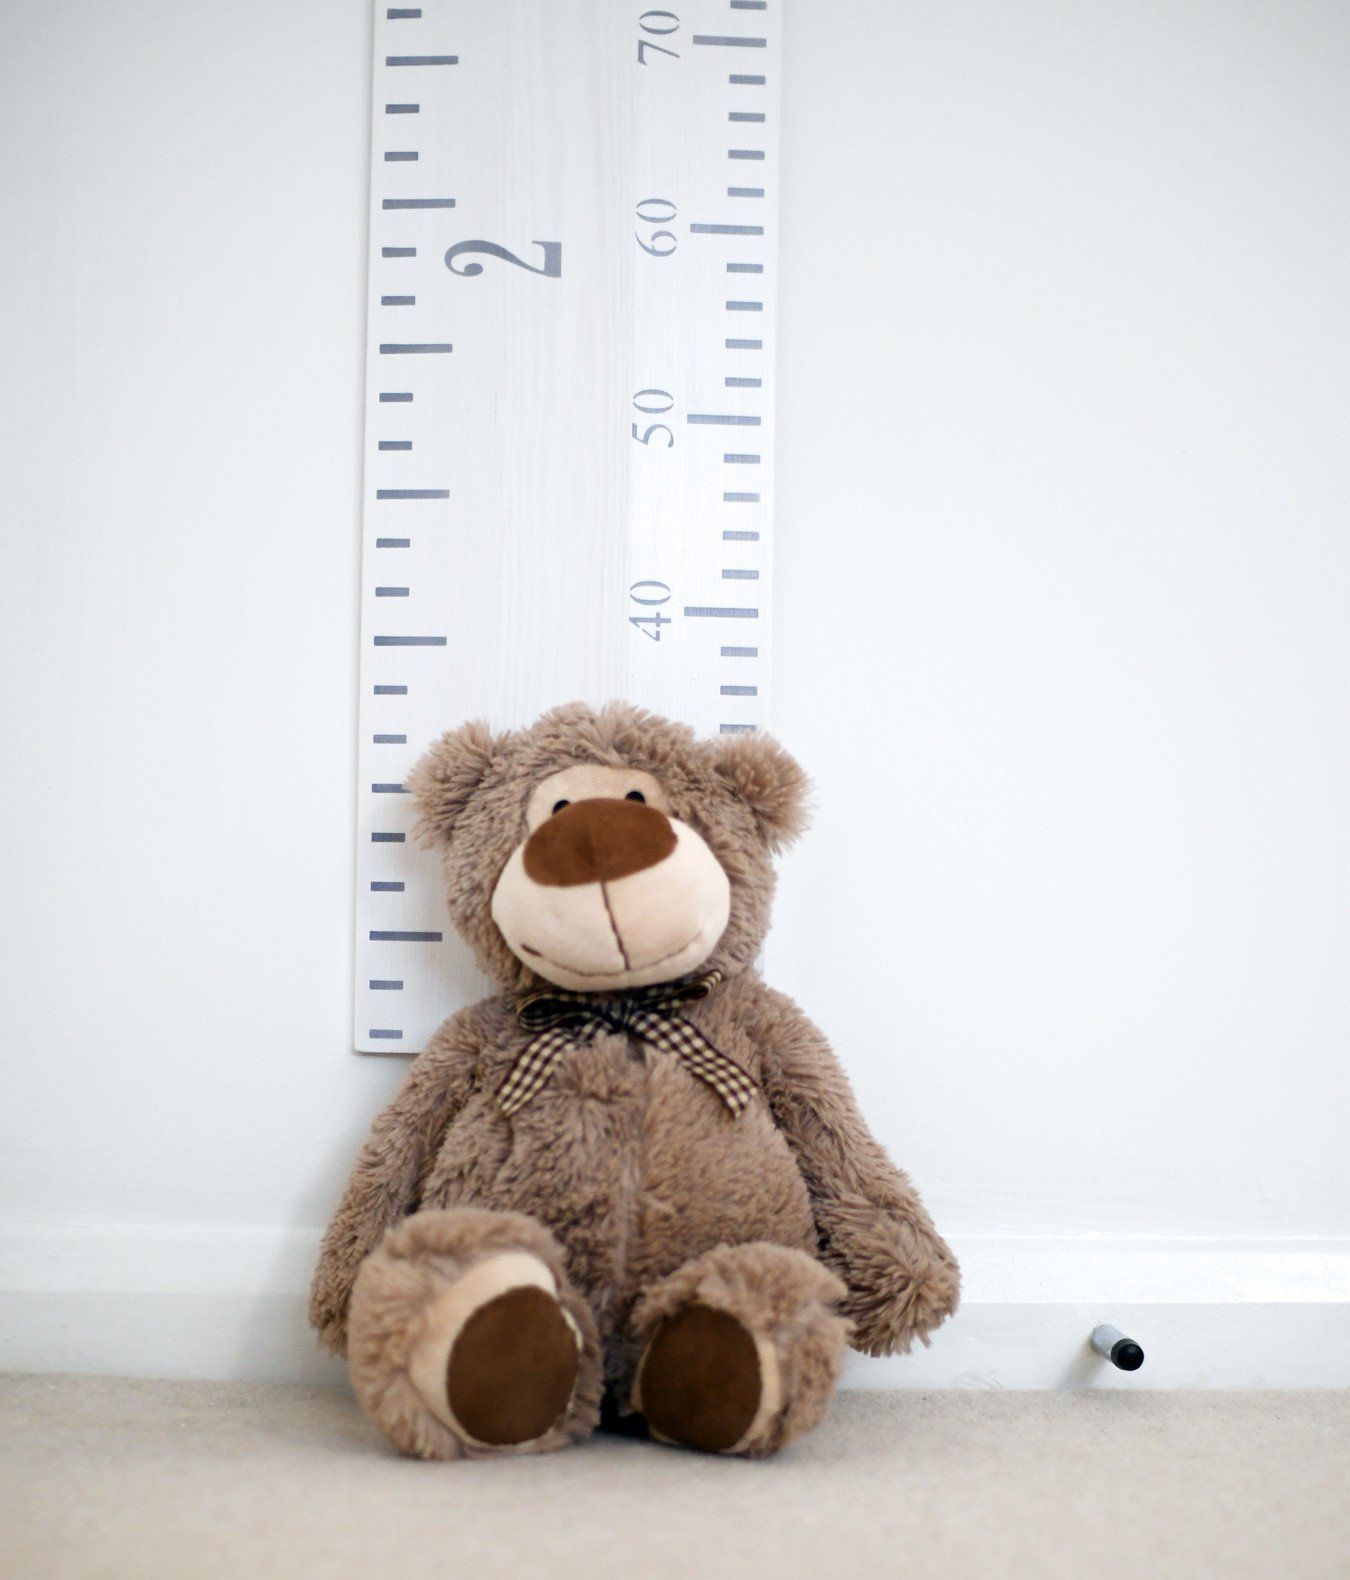 oversized wooden ruler in baby's nursery